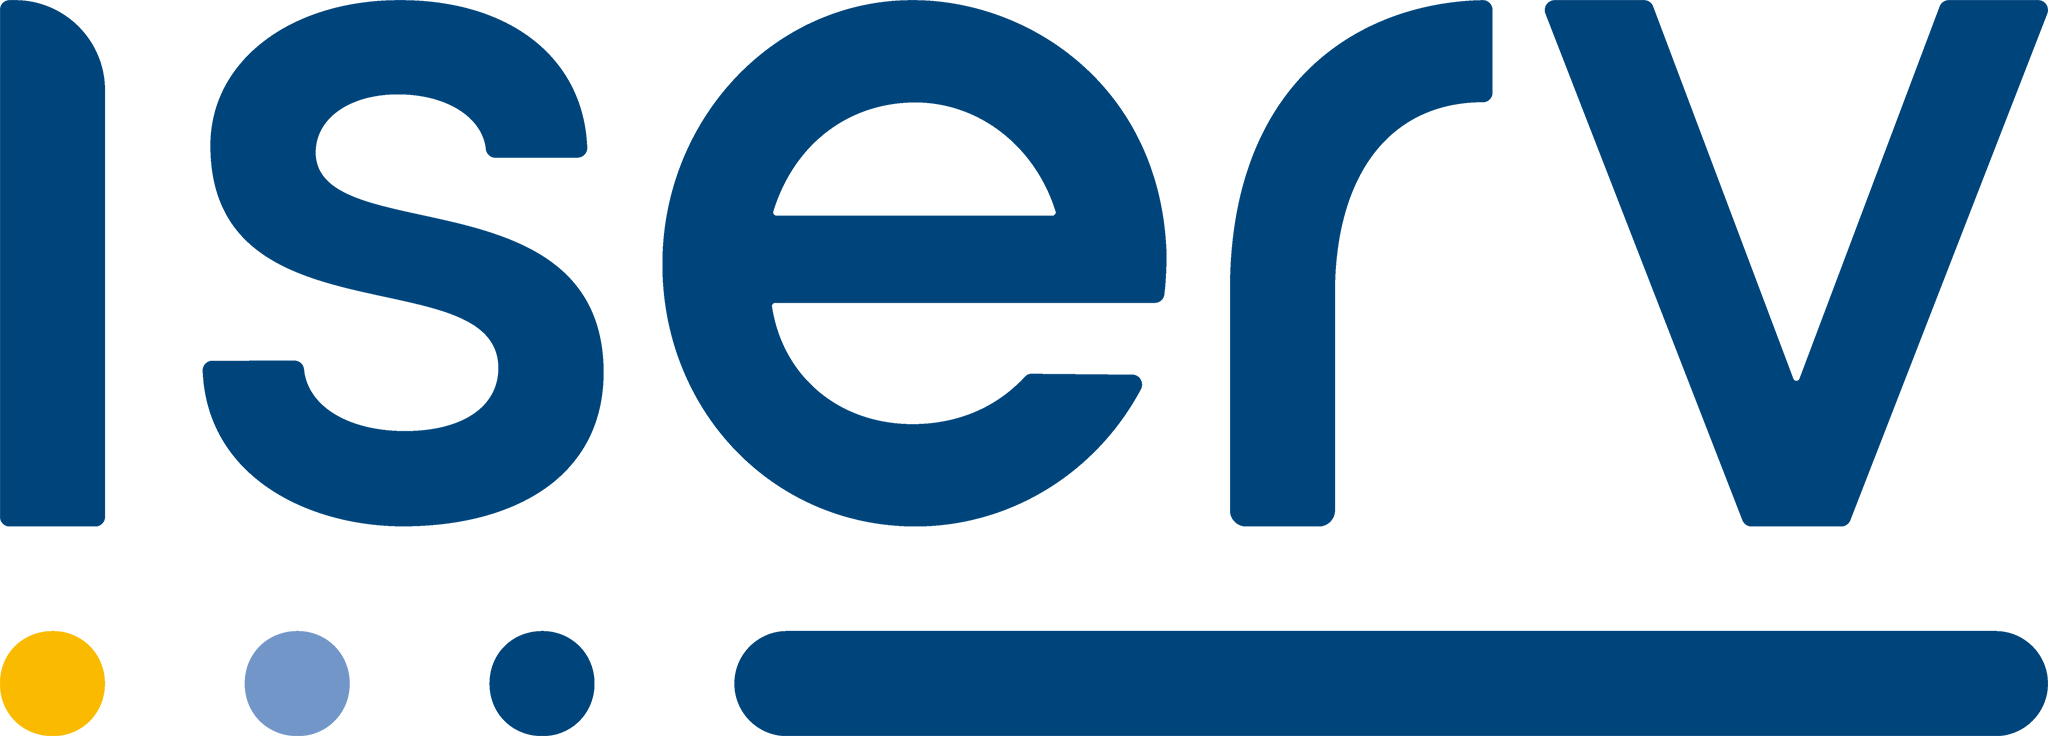 IServ_Logo.png